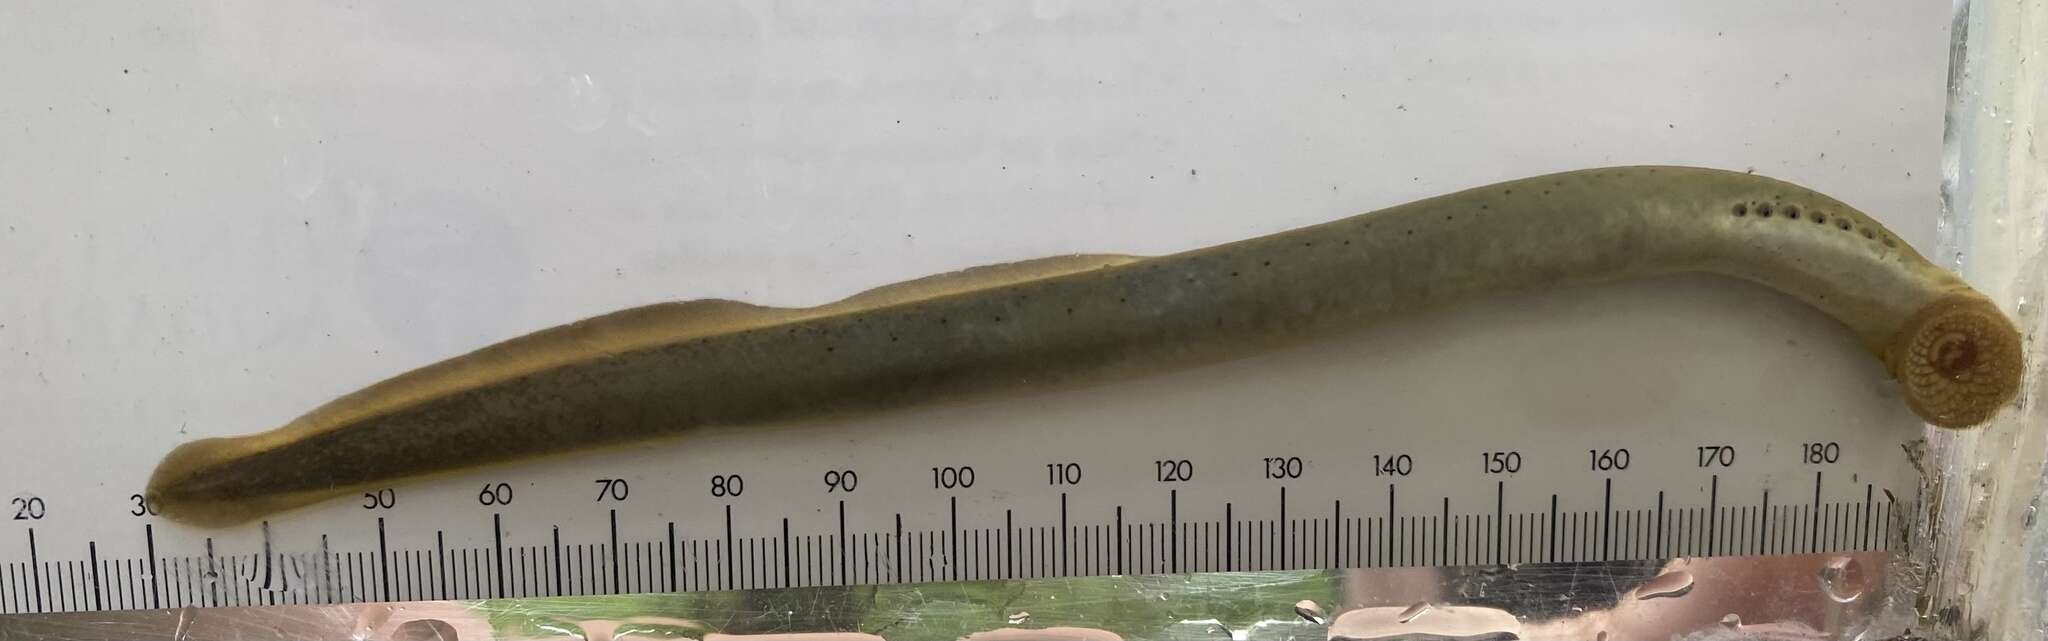 Image of Ohio lamprey